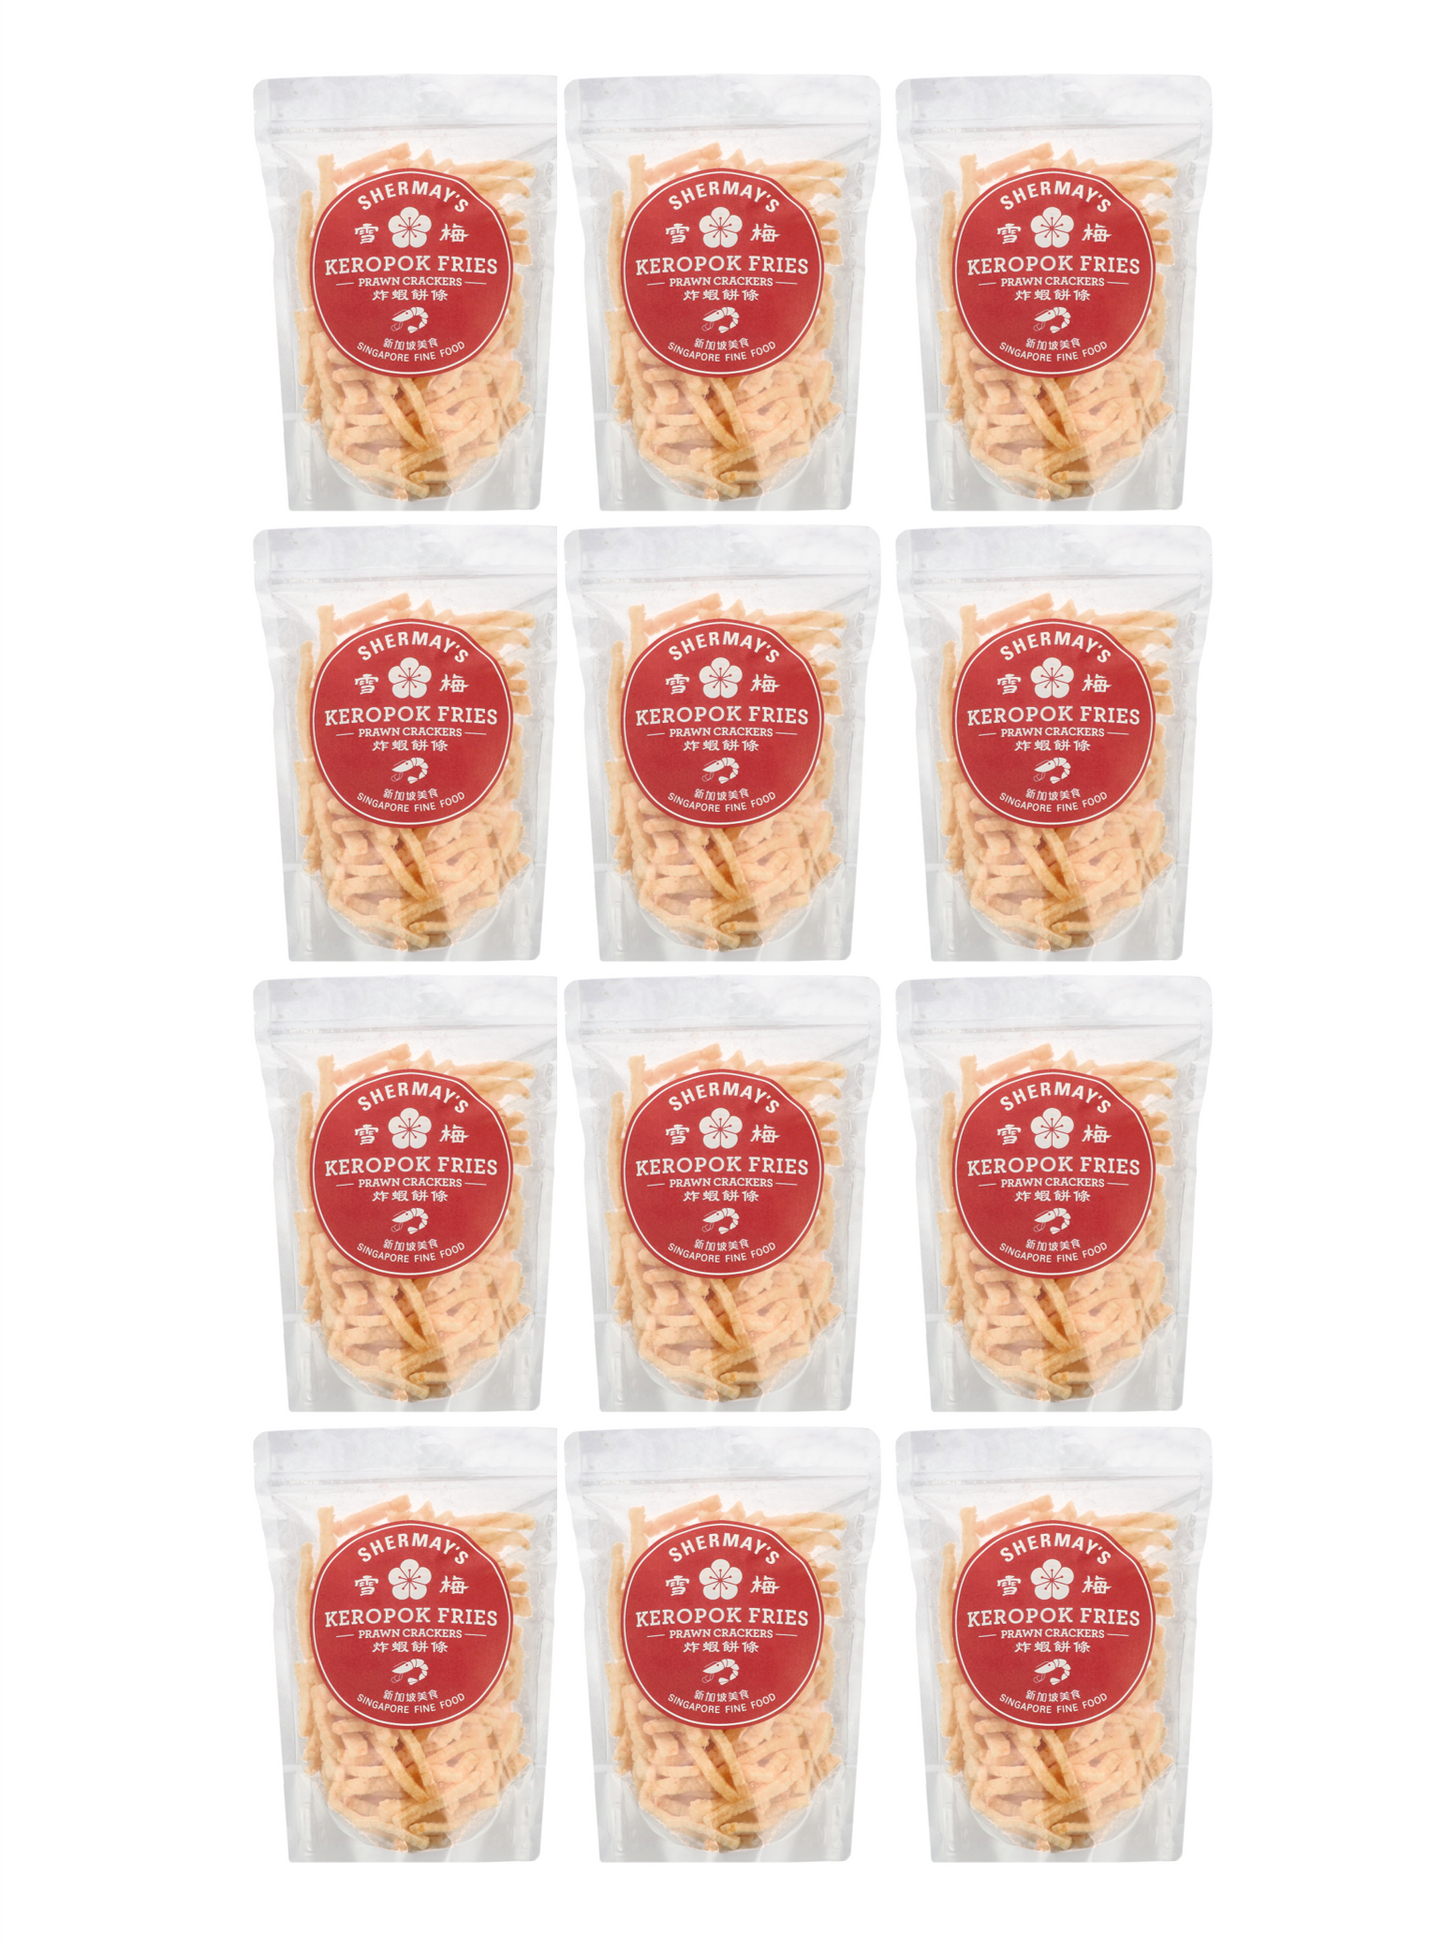 11 Keropok Fries Packets + 1 Keropok Fries Packet FREE